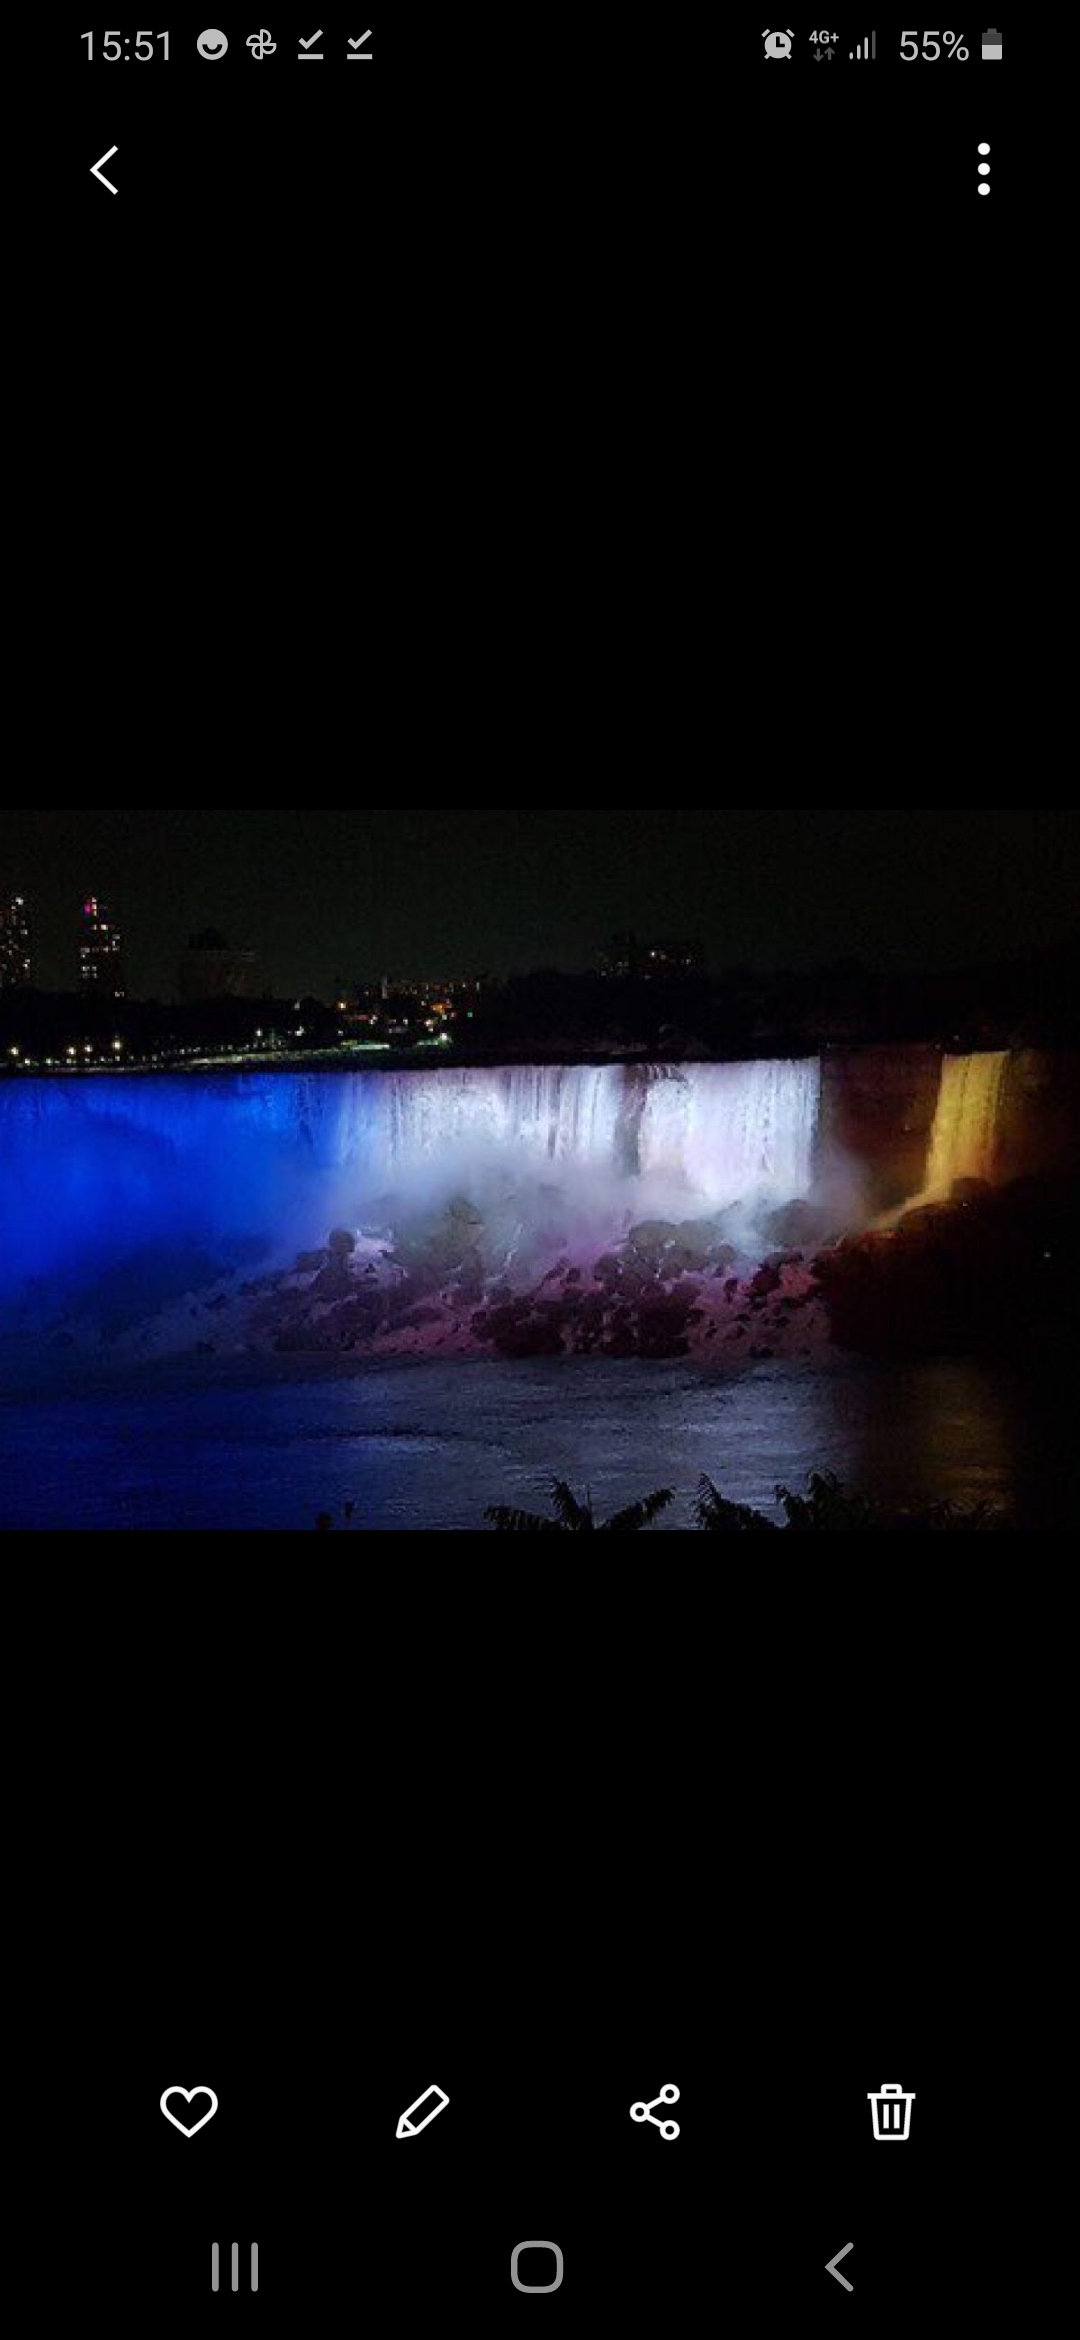 Niagara falls lit up to celebrate Leeds promotion